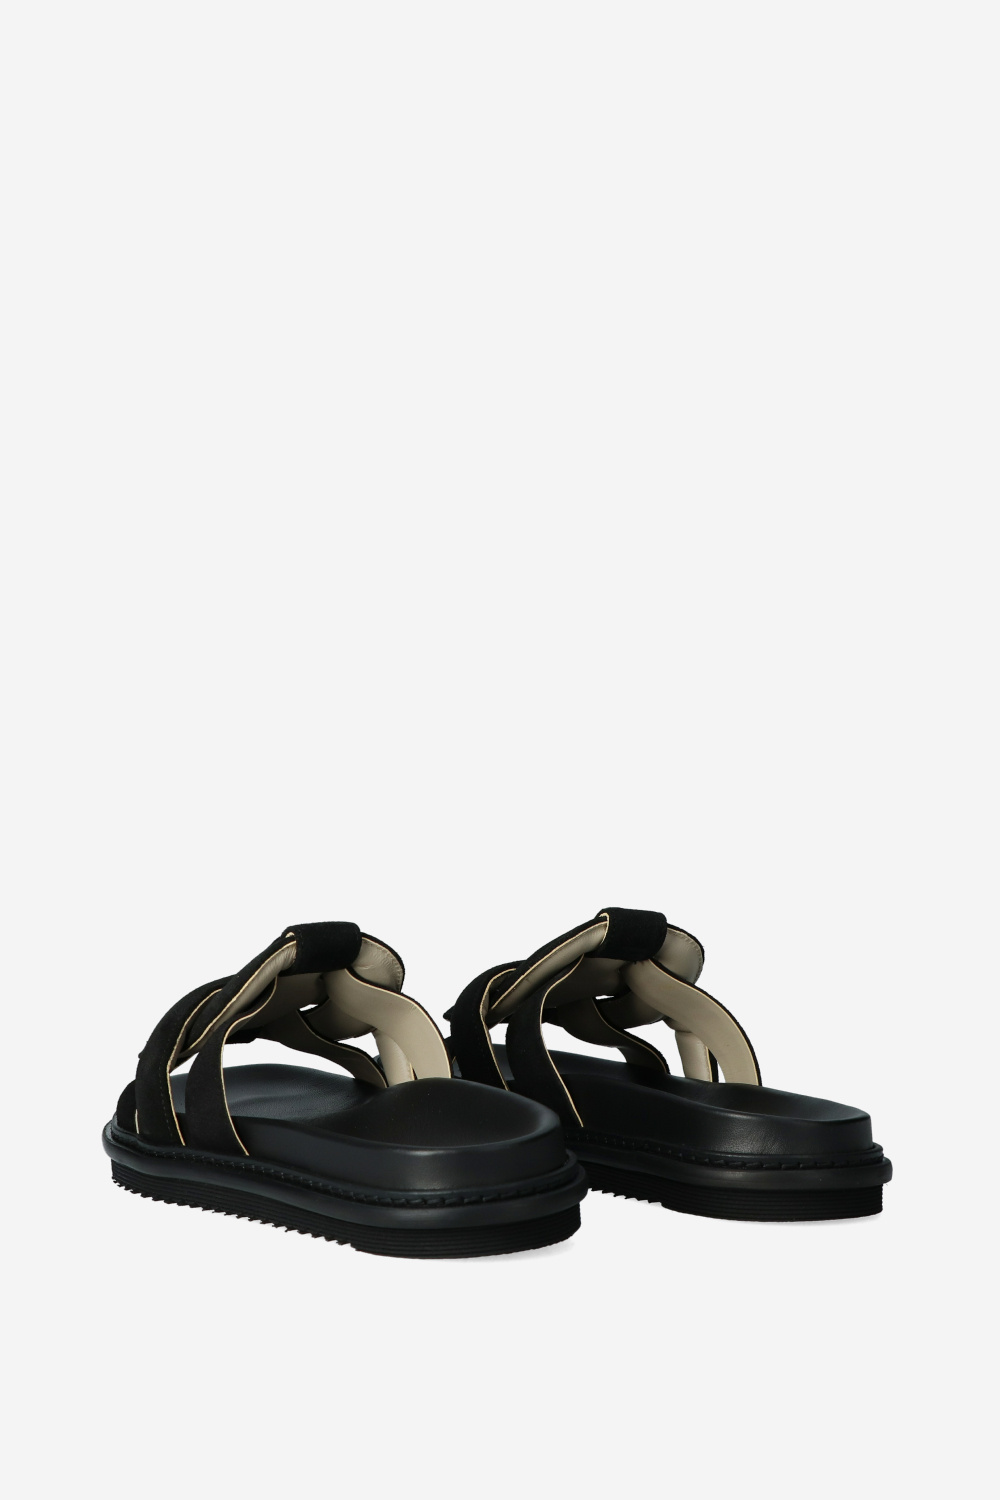 Morobe Sandals Black